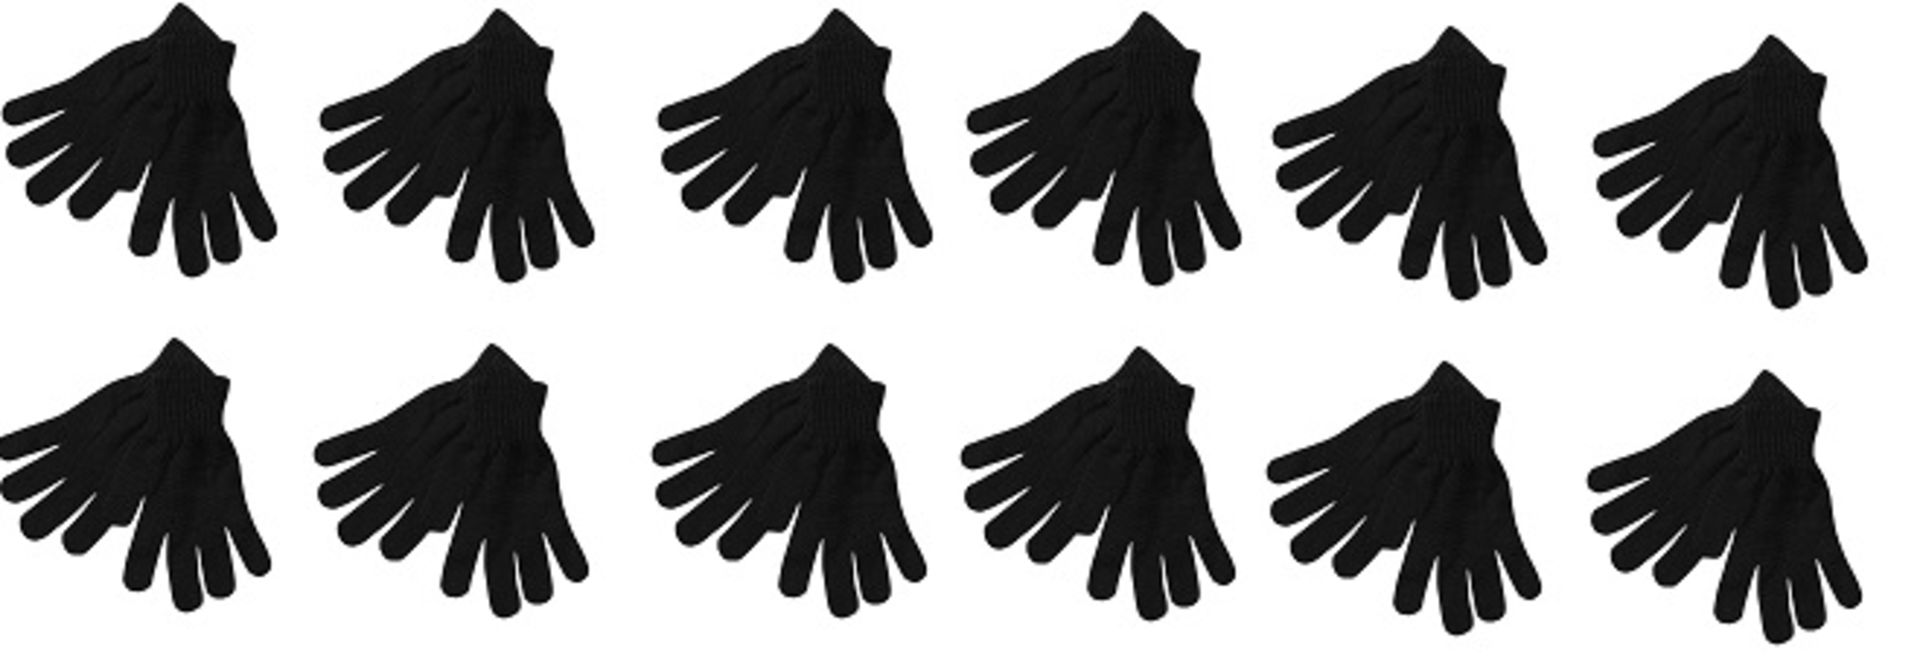 V Brand New Job Lot of Twelve Pairs Mens Black Thermal Lined Winter Gloves RRP £3.99 Per Pair